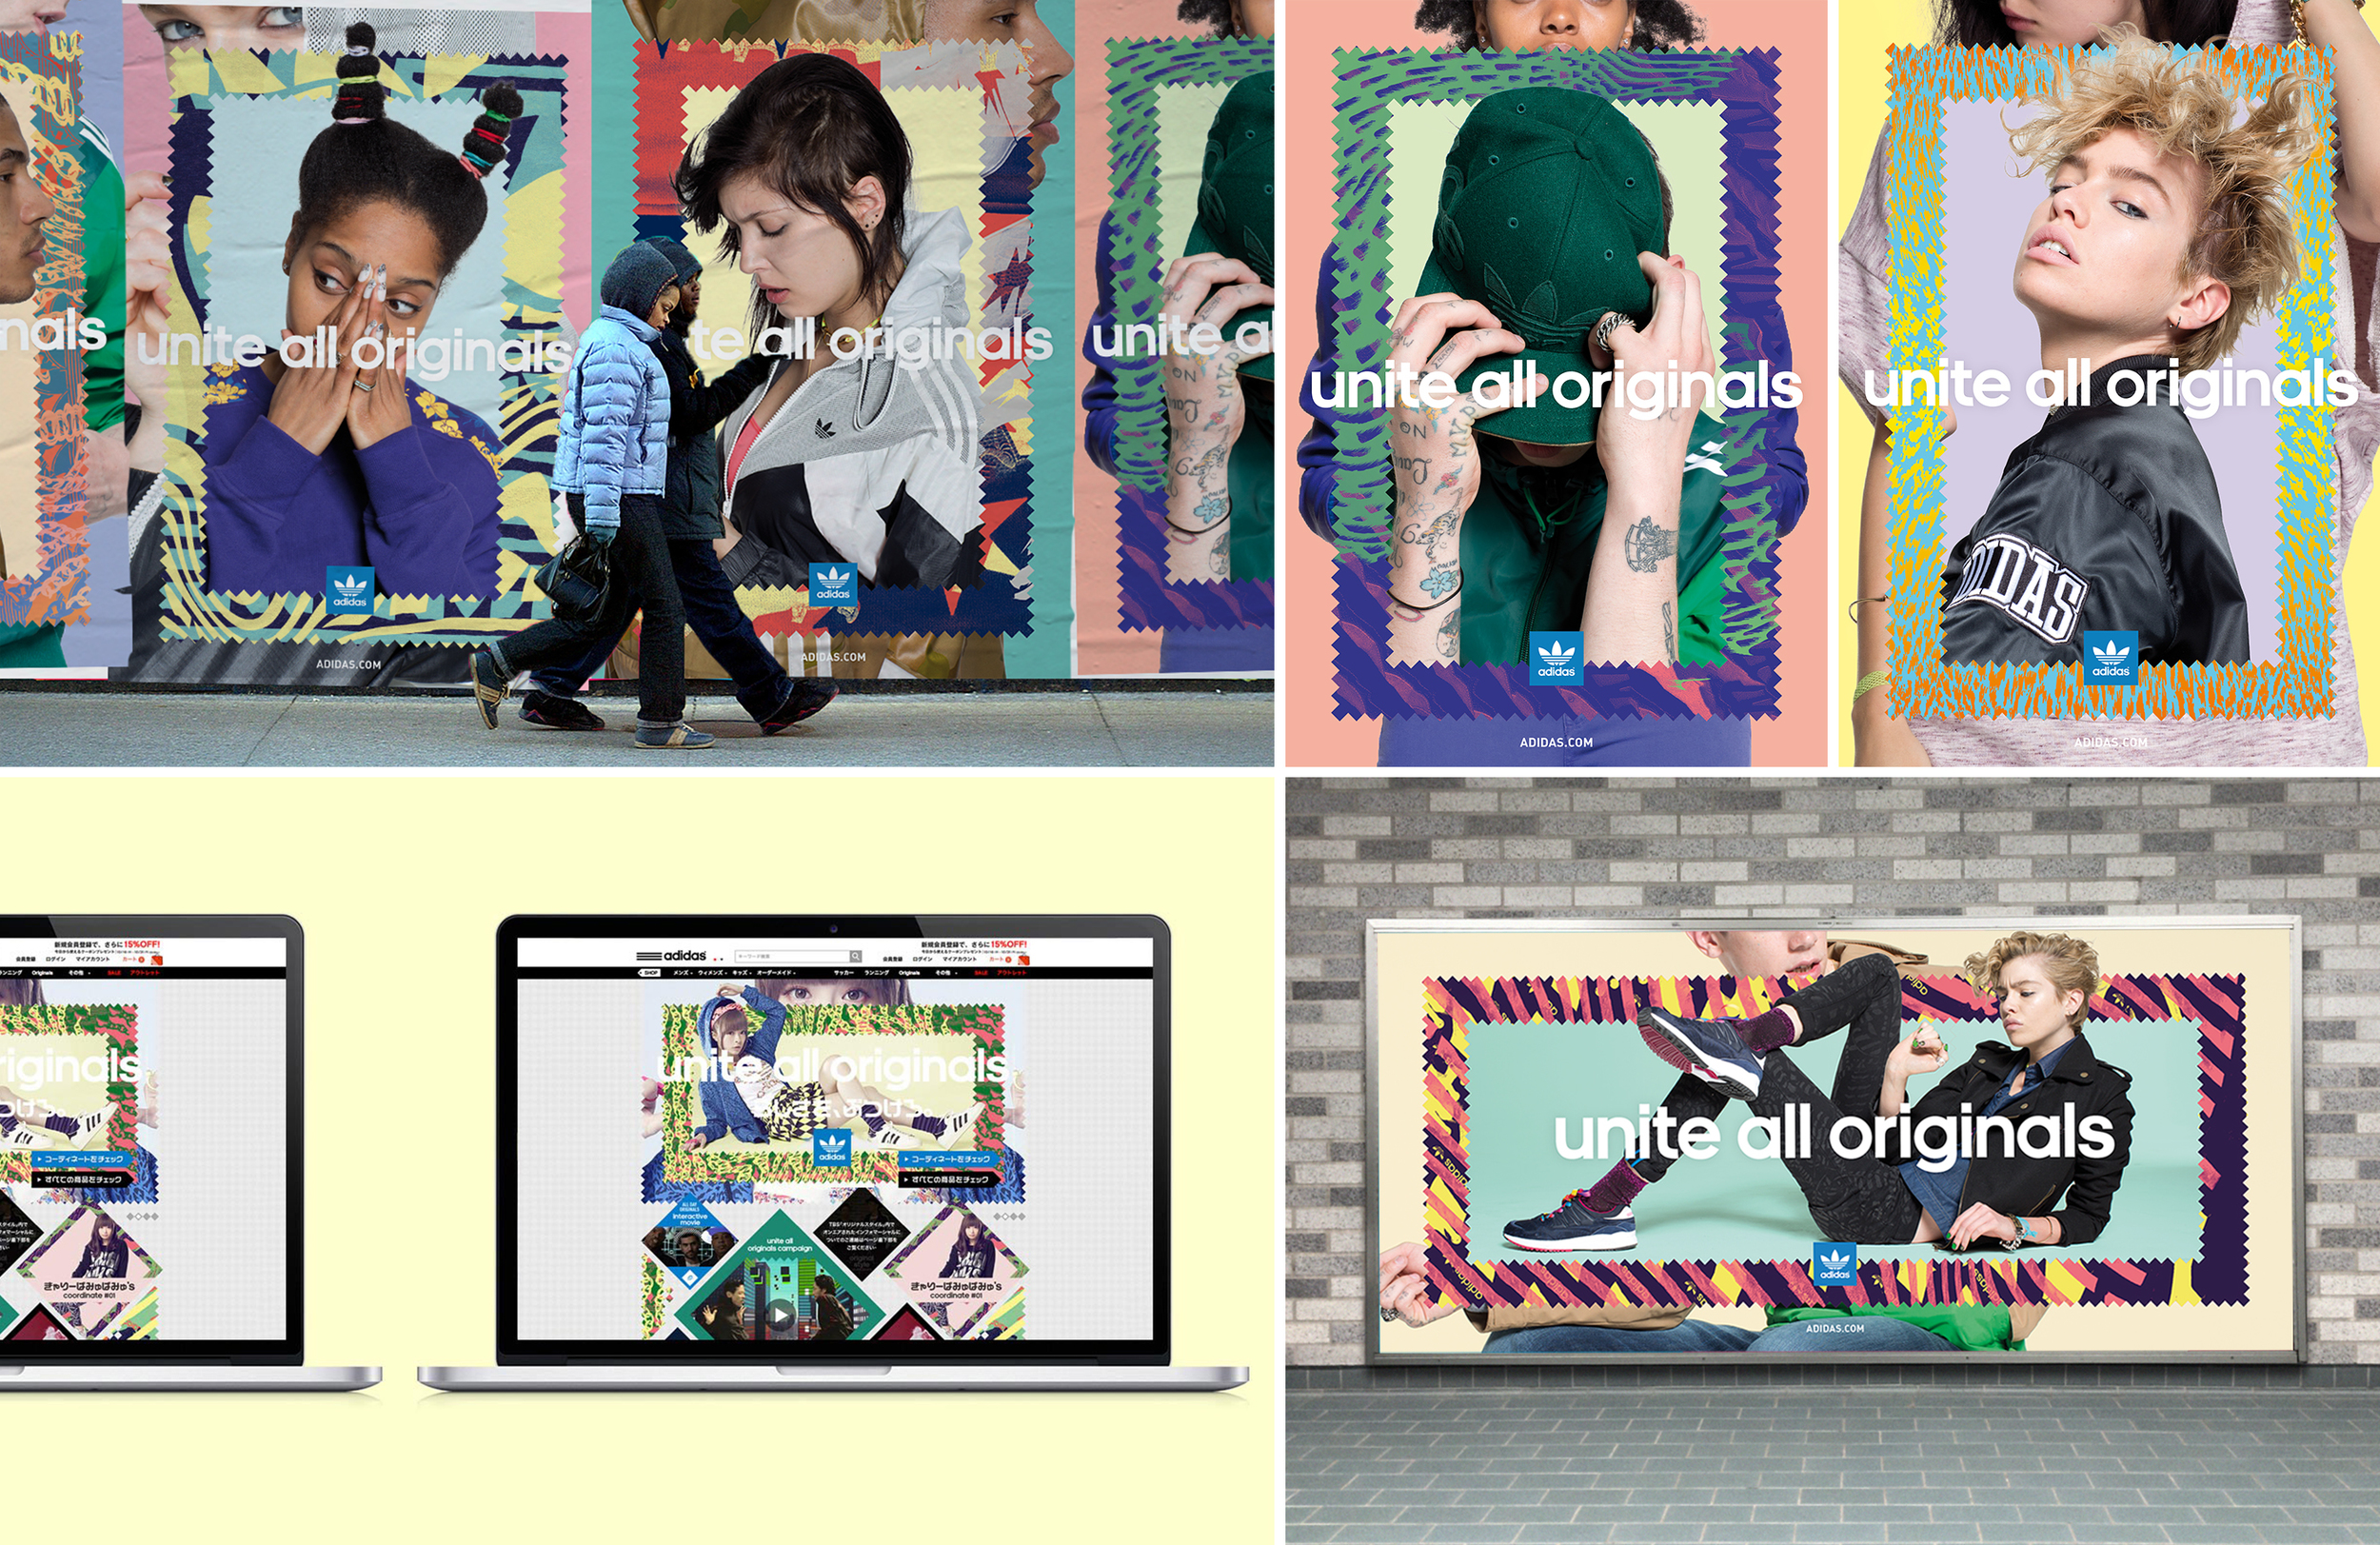 adidas</br>Unite all Originals</br>Campaign visuals</br>(2013)